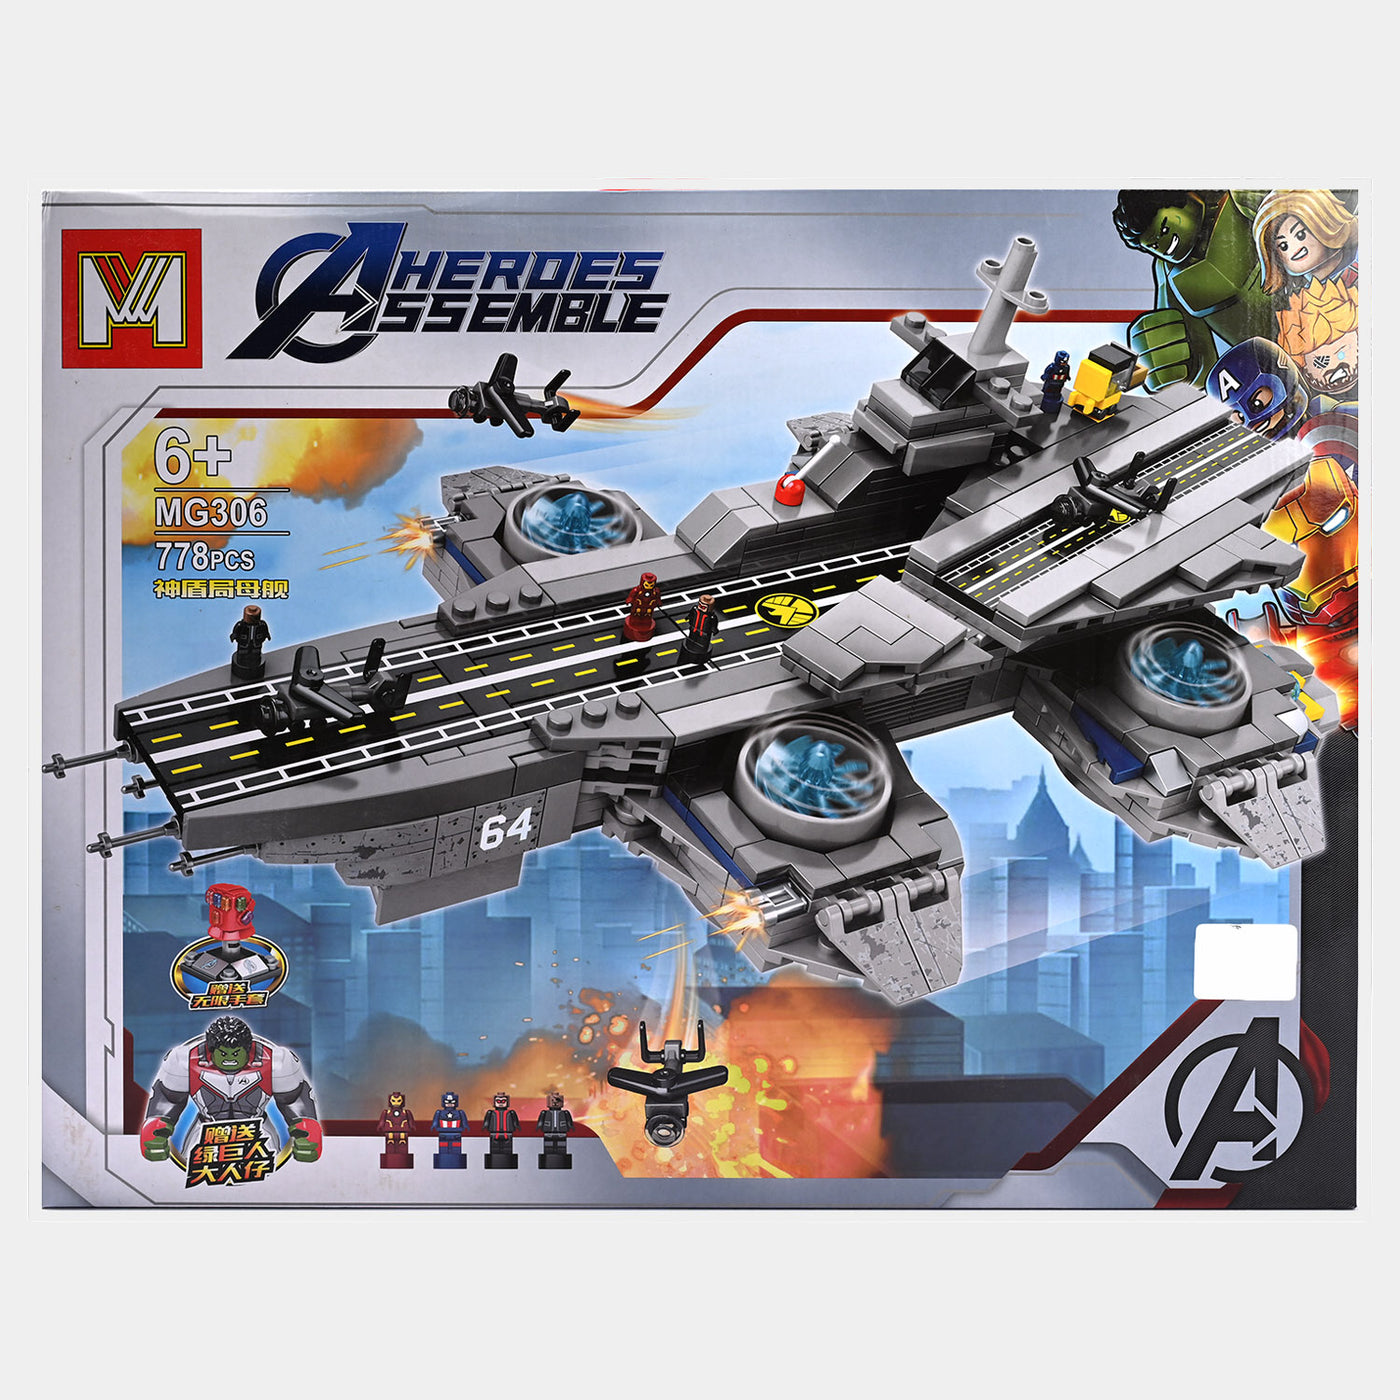 Lego Action Heroes Building Blocks Set | 778PCs | MG306